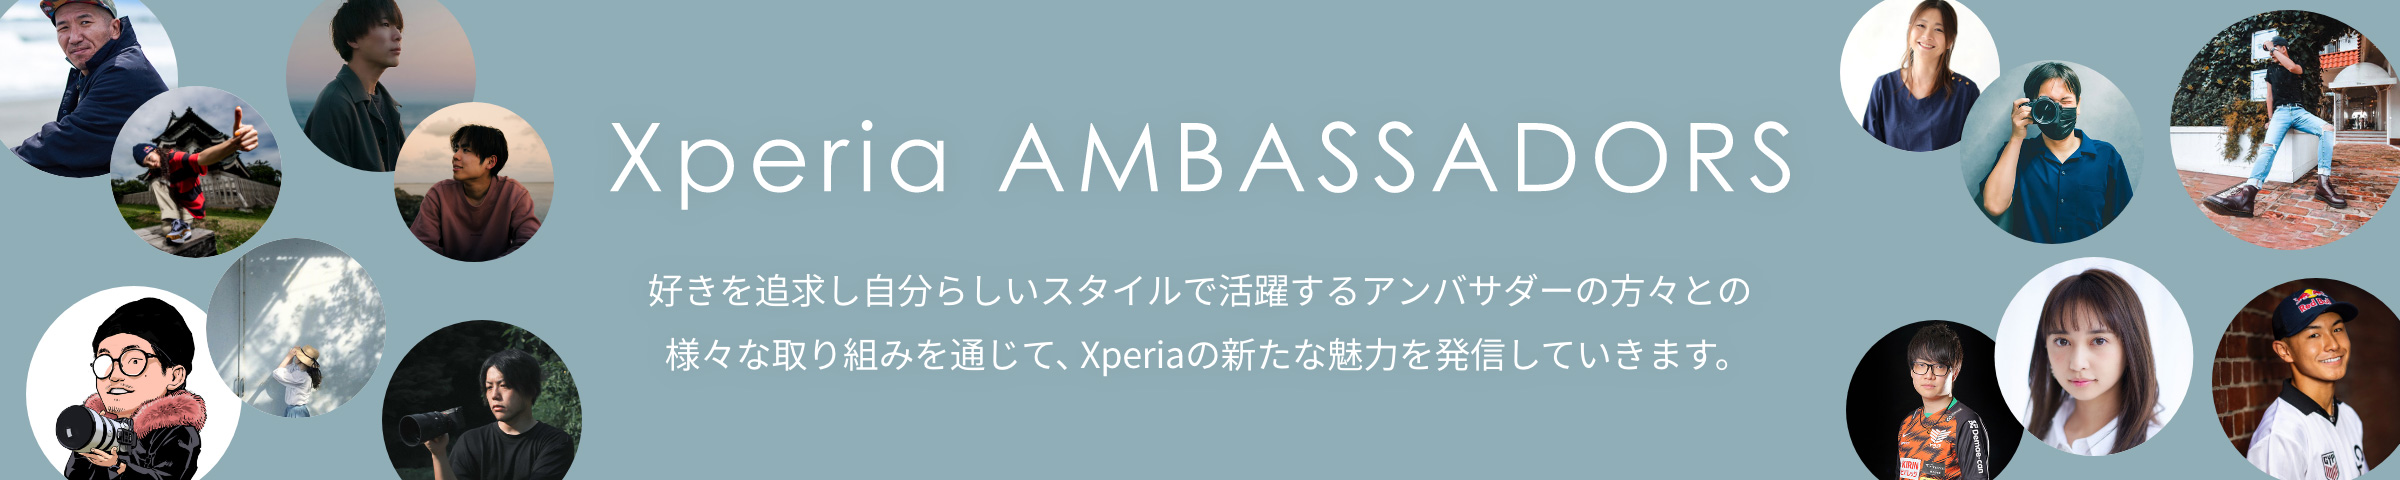 Xperia AMBASSADORS 好きを追求し自分らしいスタイルで活躍するアンバサダーの方々との様々な取り組みを通じて、Xperiaの新たな魅力を発信していきます。